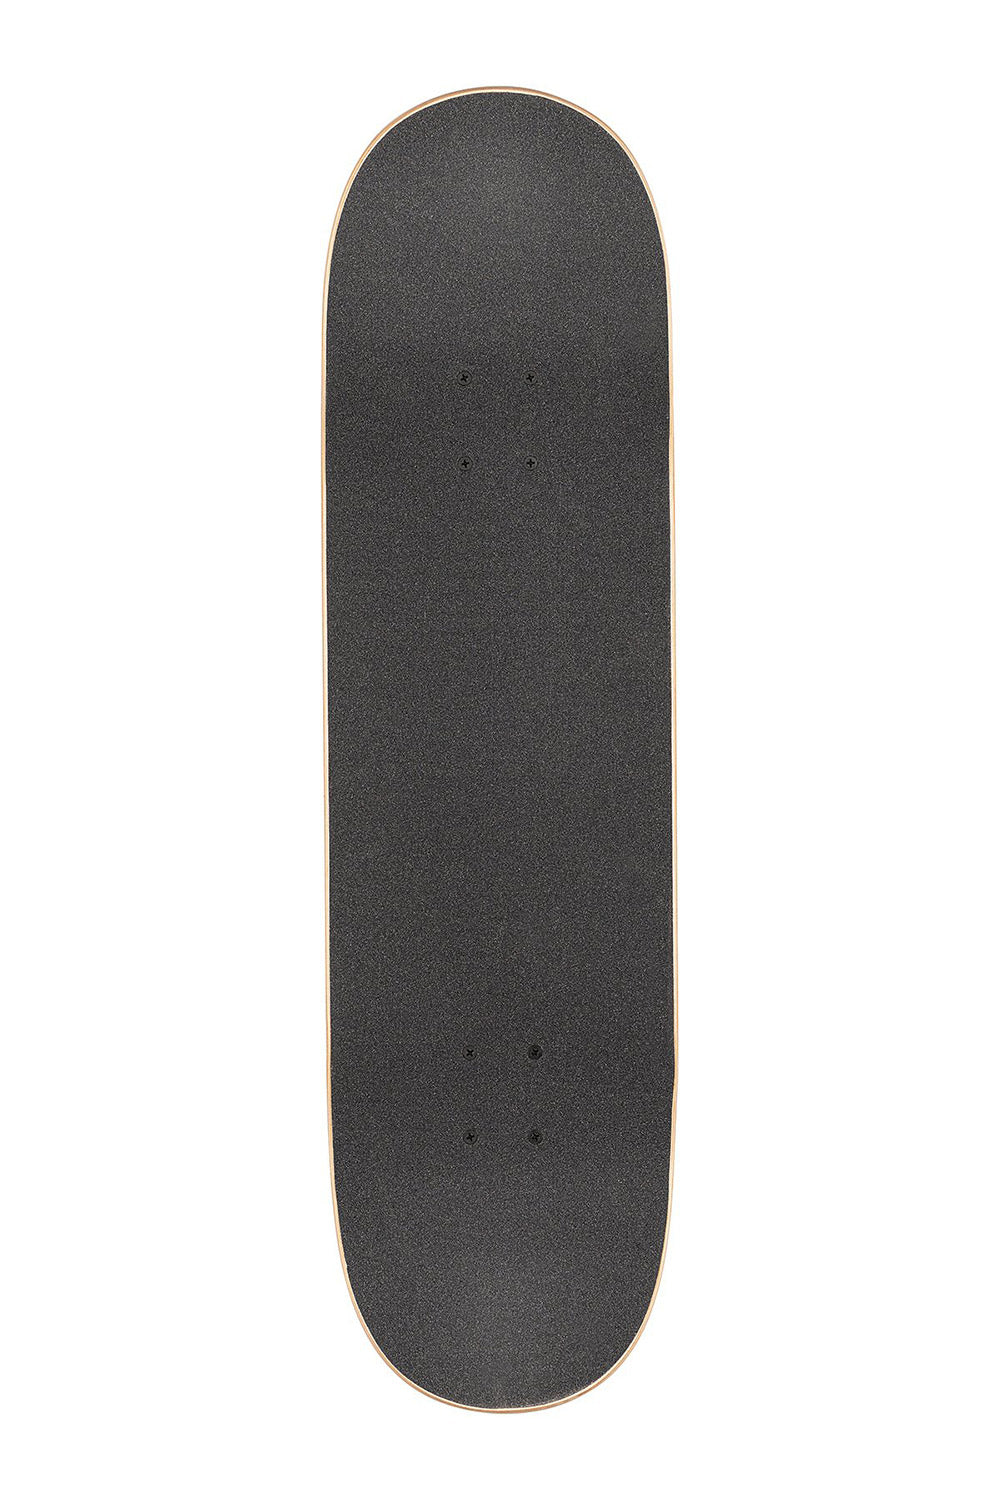 Shop Globe Skateboards | Globe G1 Stack Complete Skateboard - 8.0"